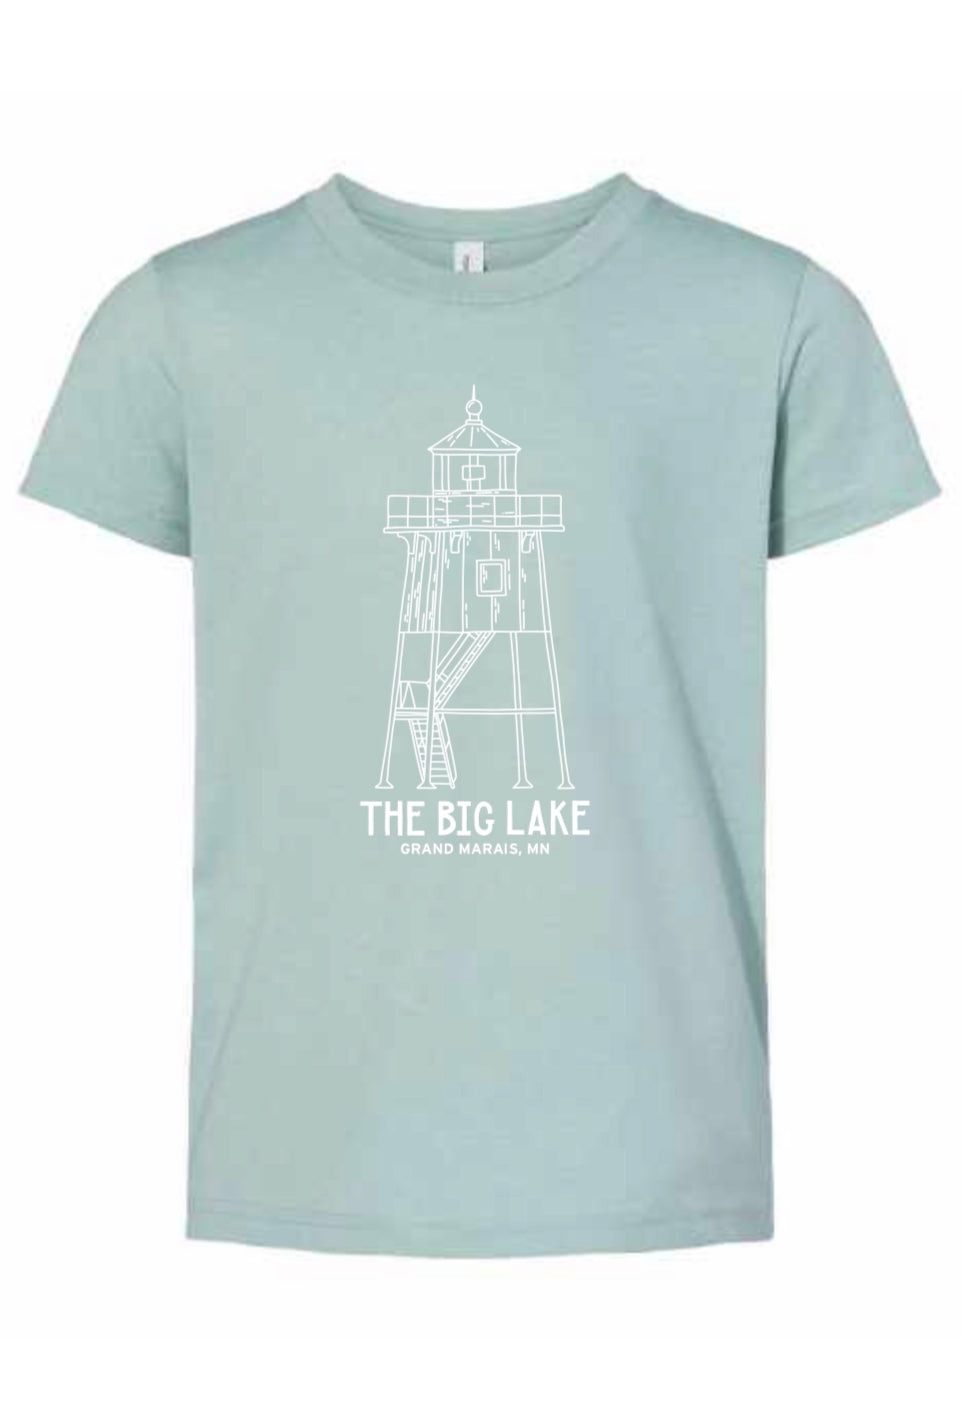 Dusty Blue GM Lighthouse | Youth Sized